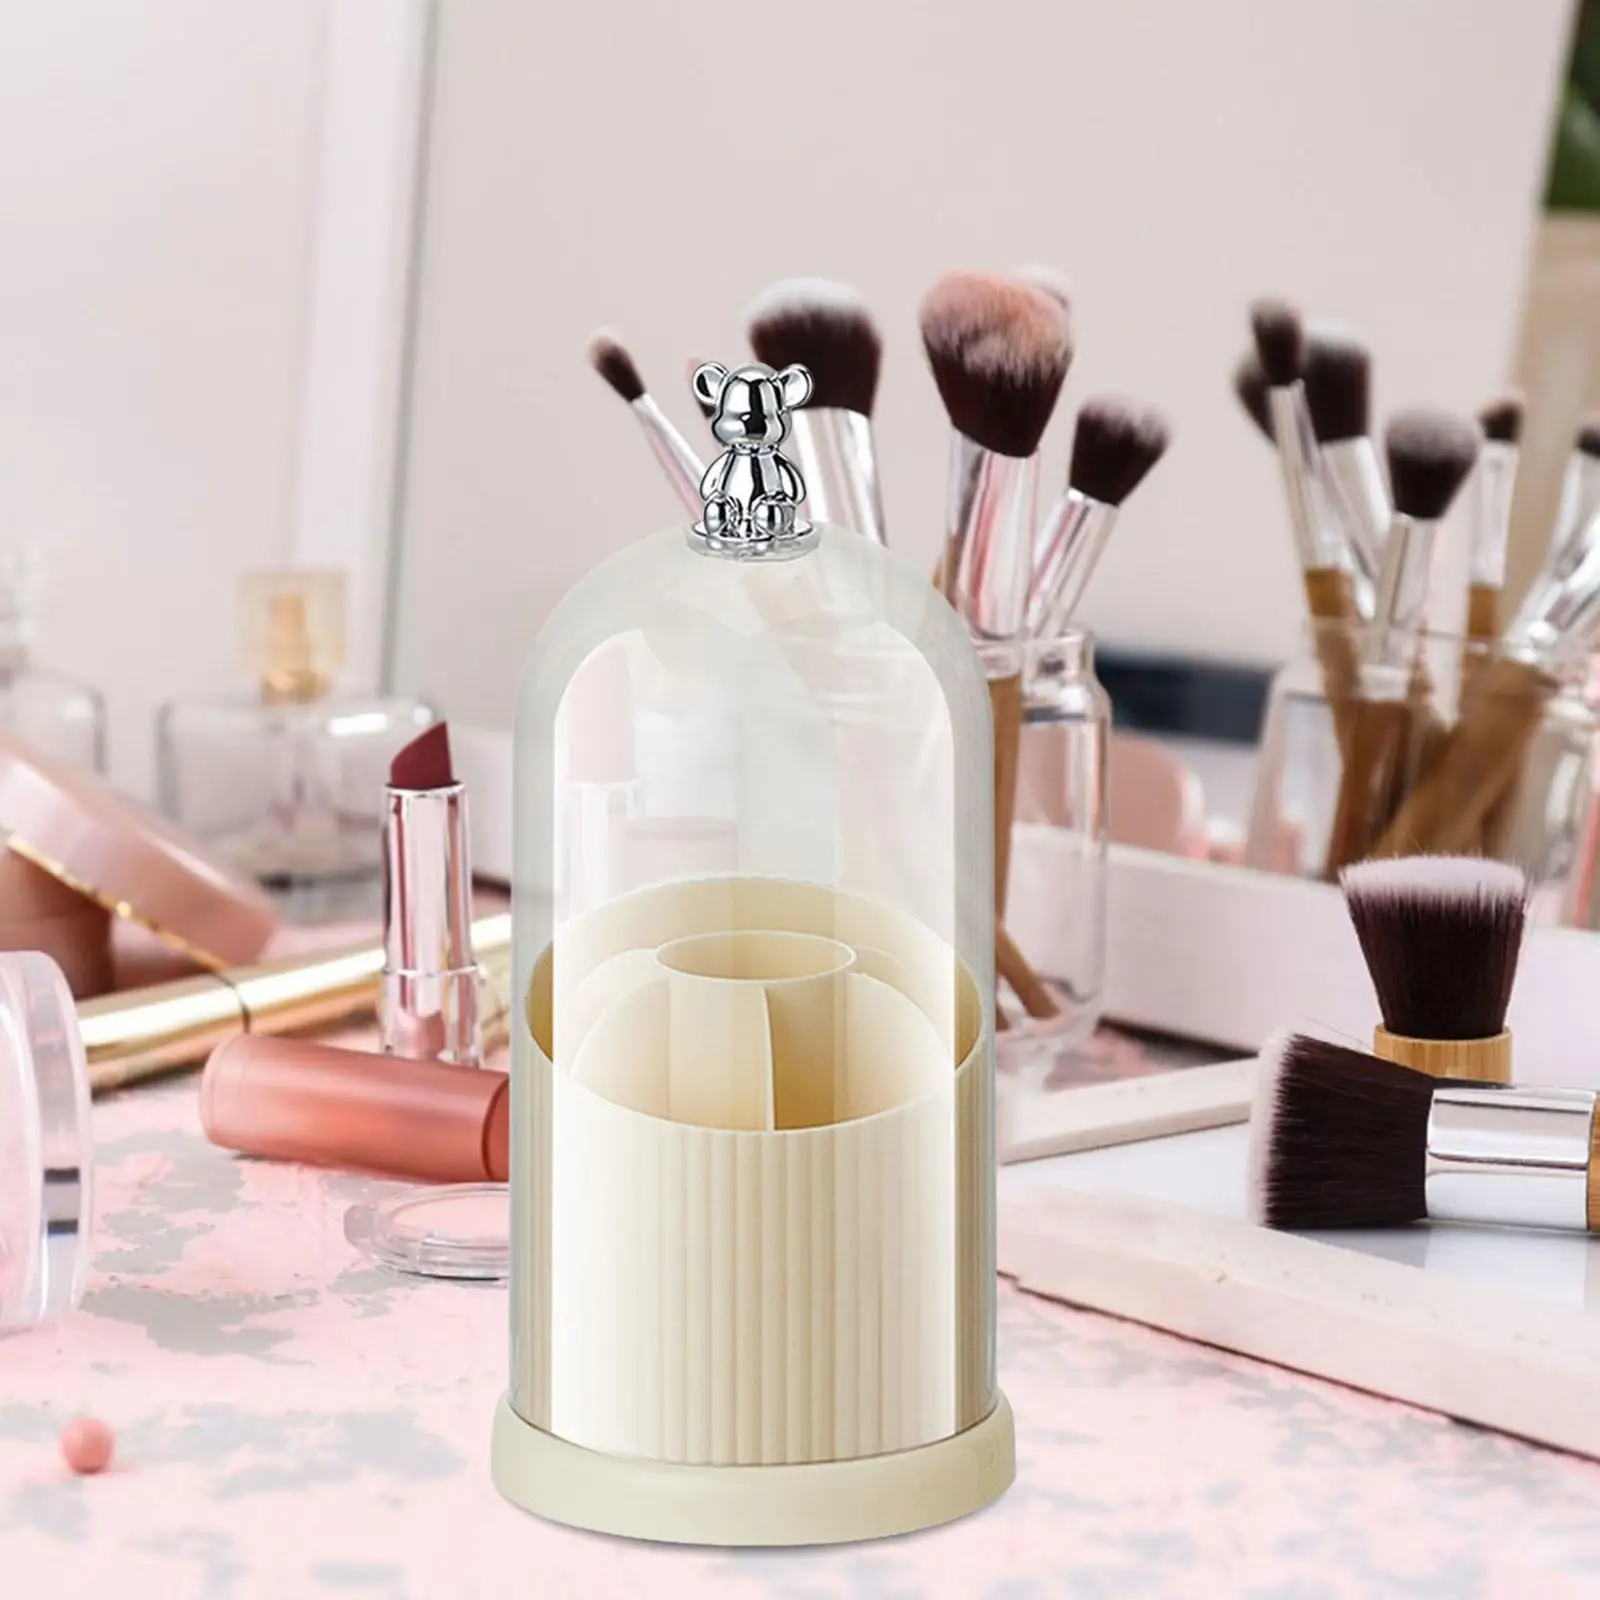 Makeup Brush Organizer Large Capacity Waterproof Cosmetics Brushes Storage Container for Vanity Desktop Countertop Bathroom